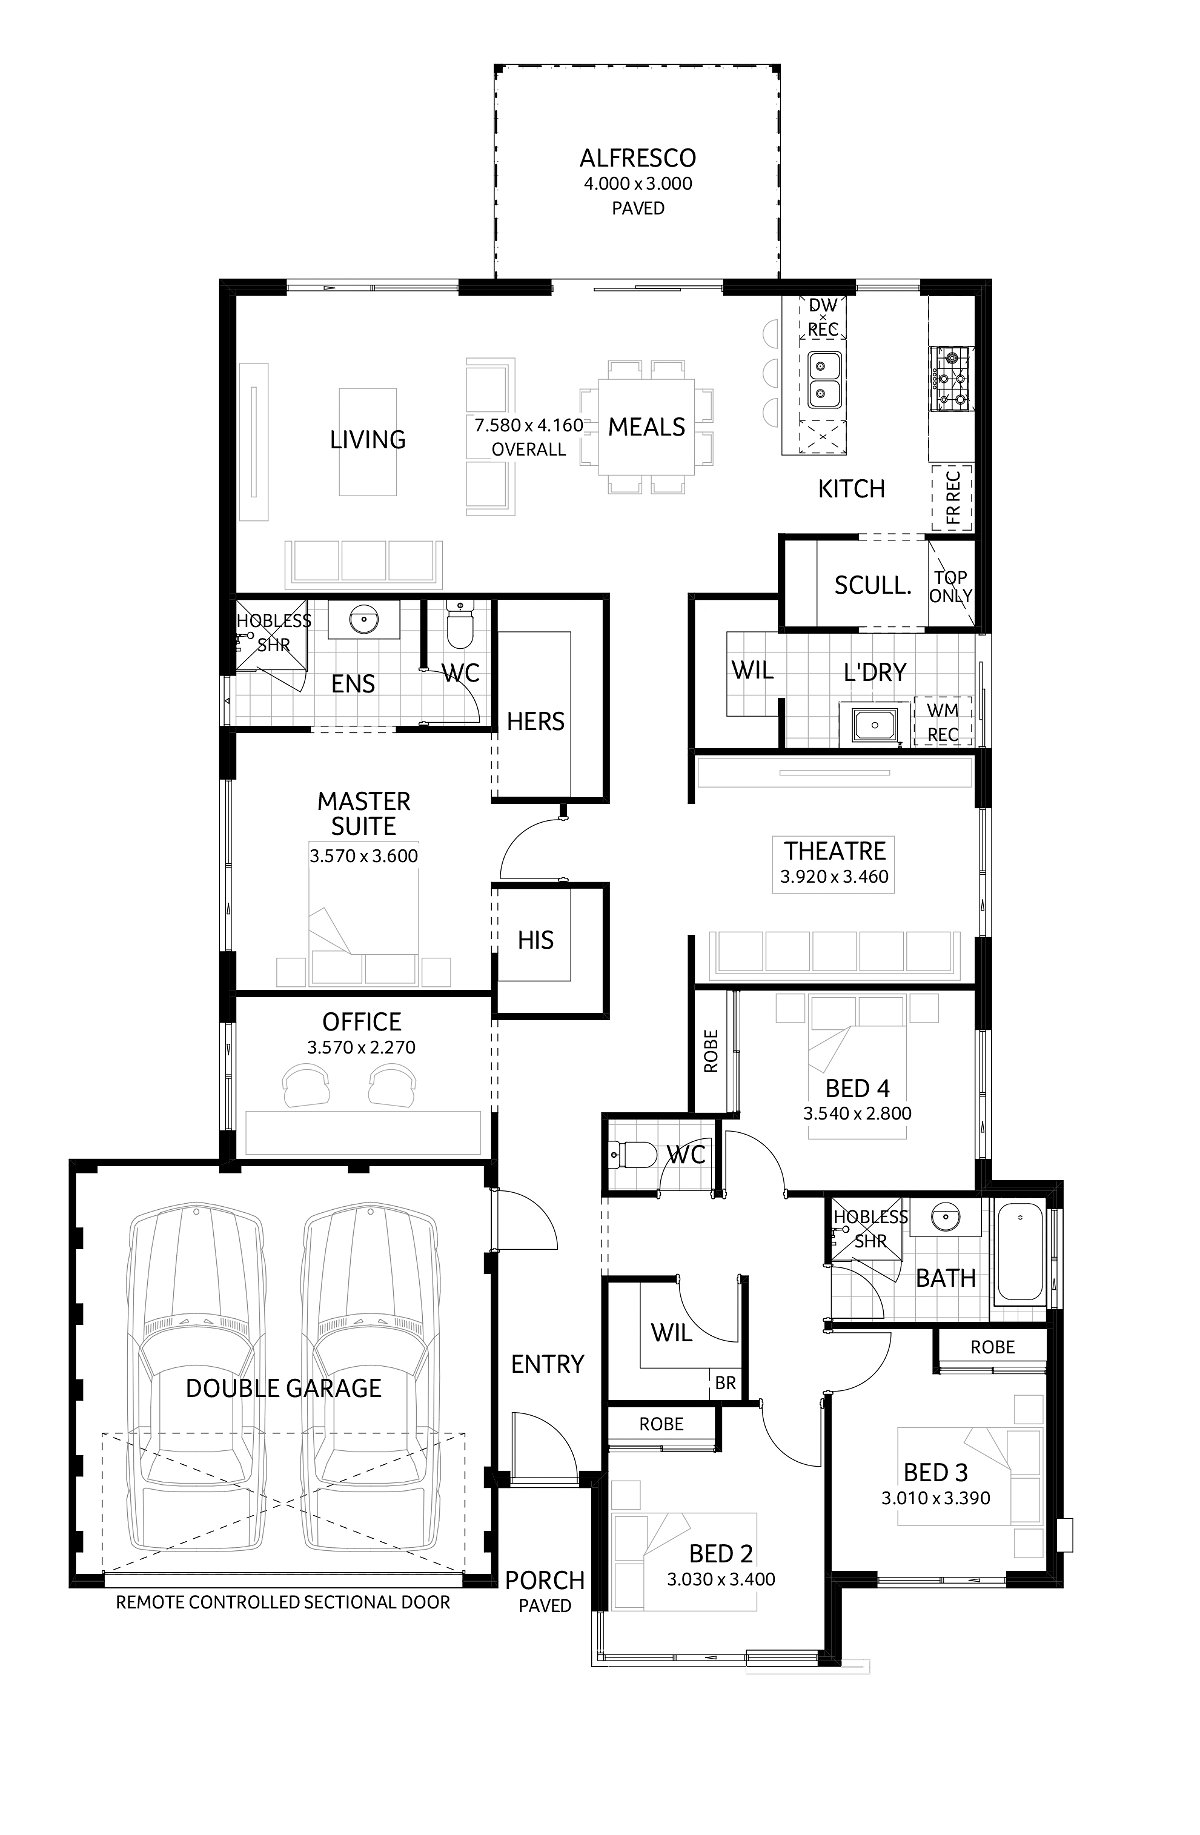 Plunkett Homes - Atomic | Lifestyle - Floorplan - Atomic Lifestyle Contemporary Marketing Plan Croppedjpg